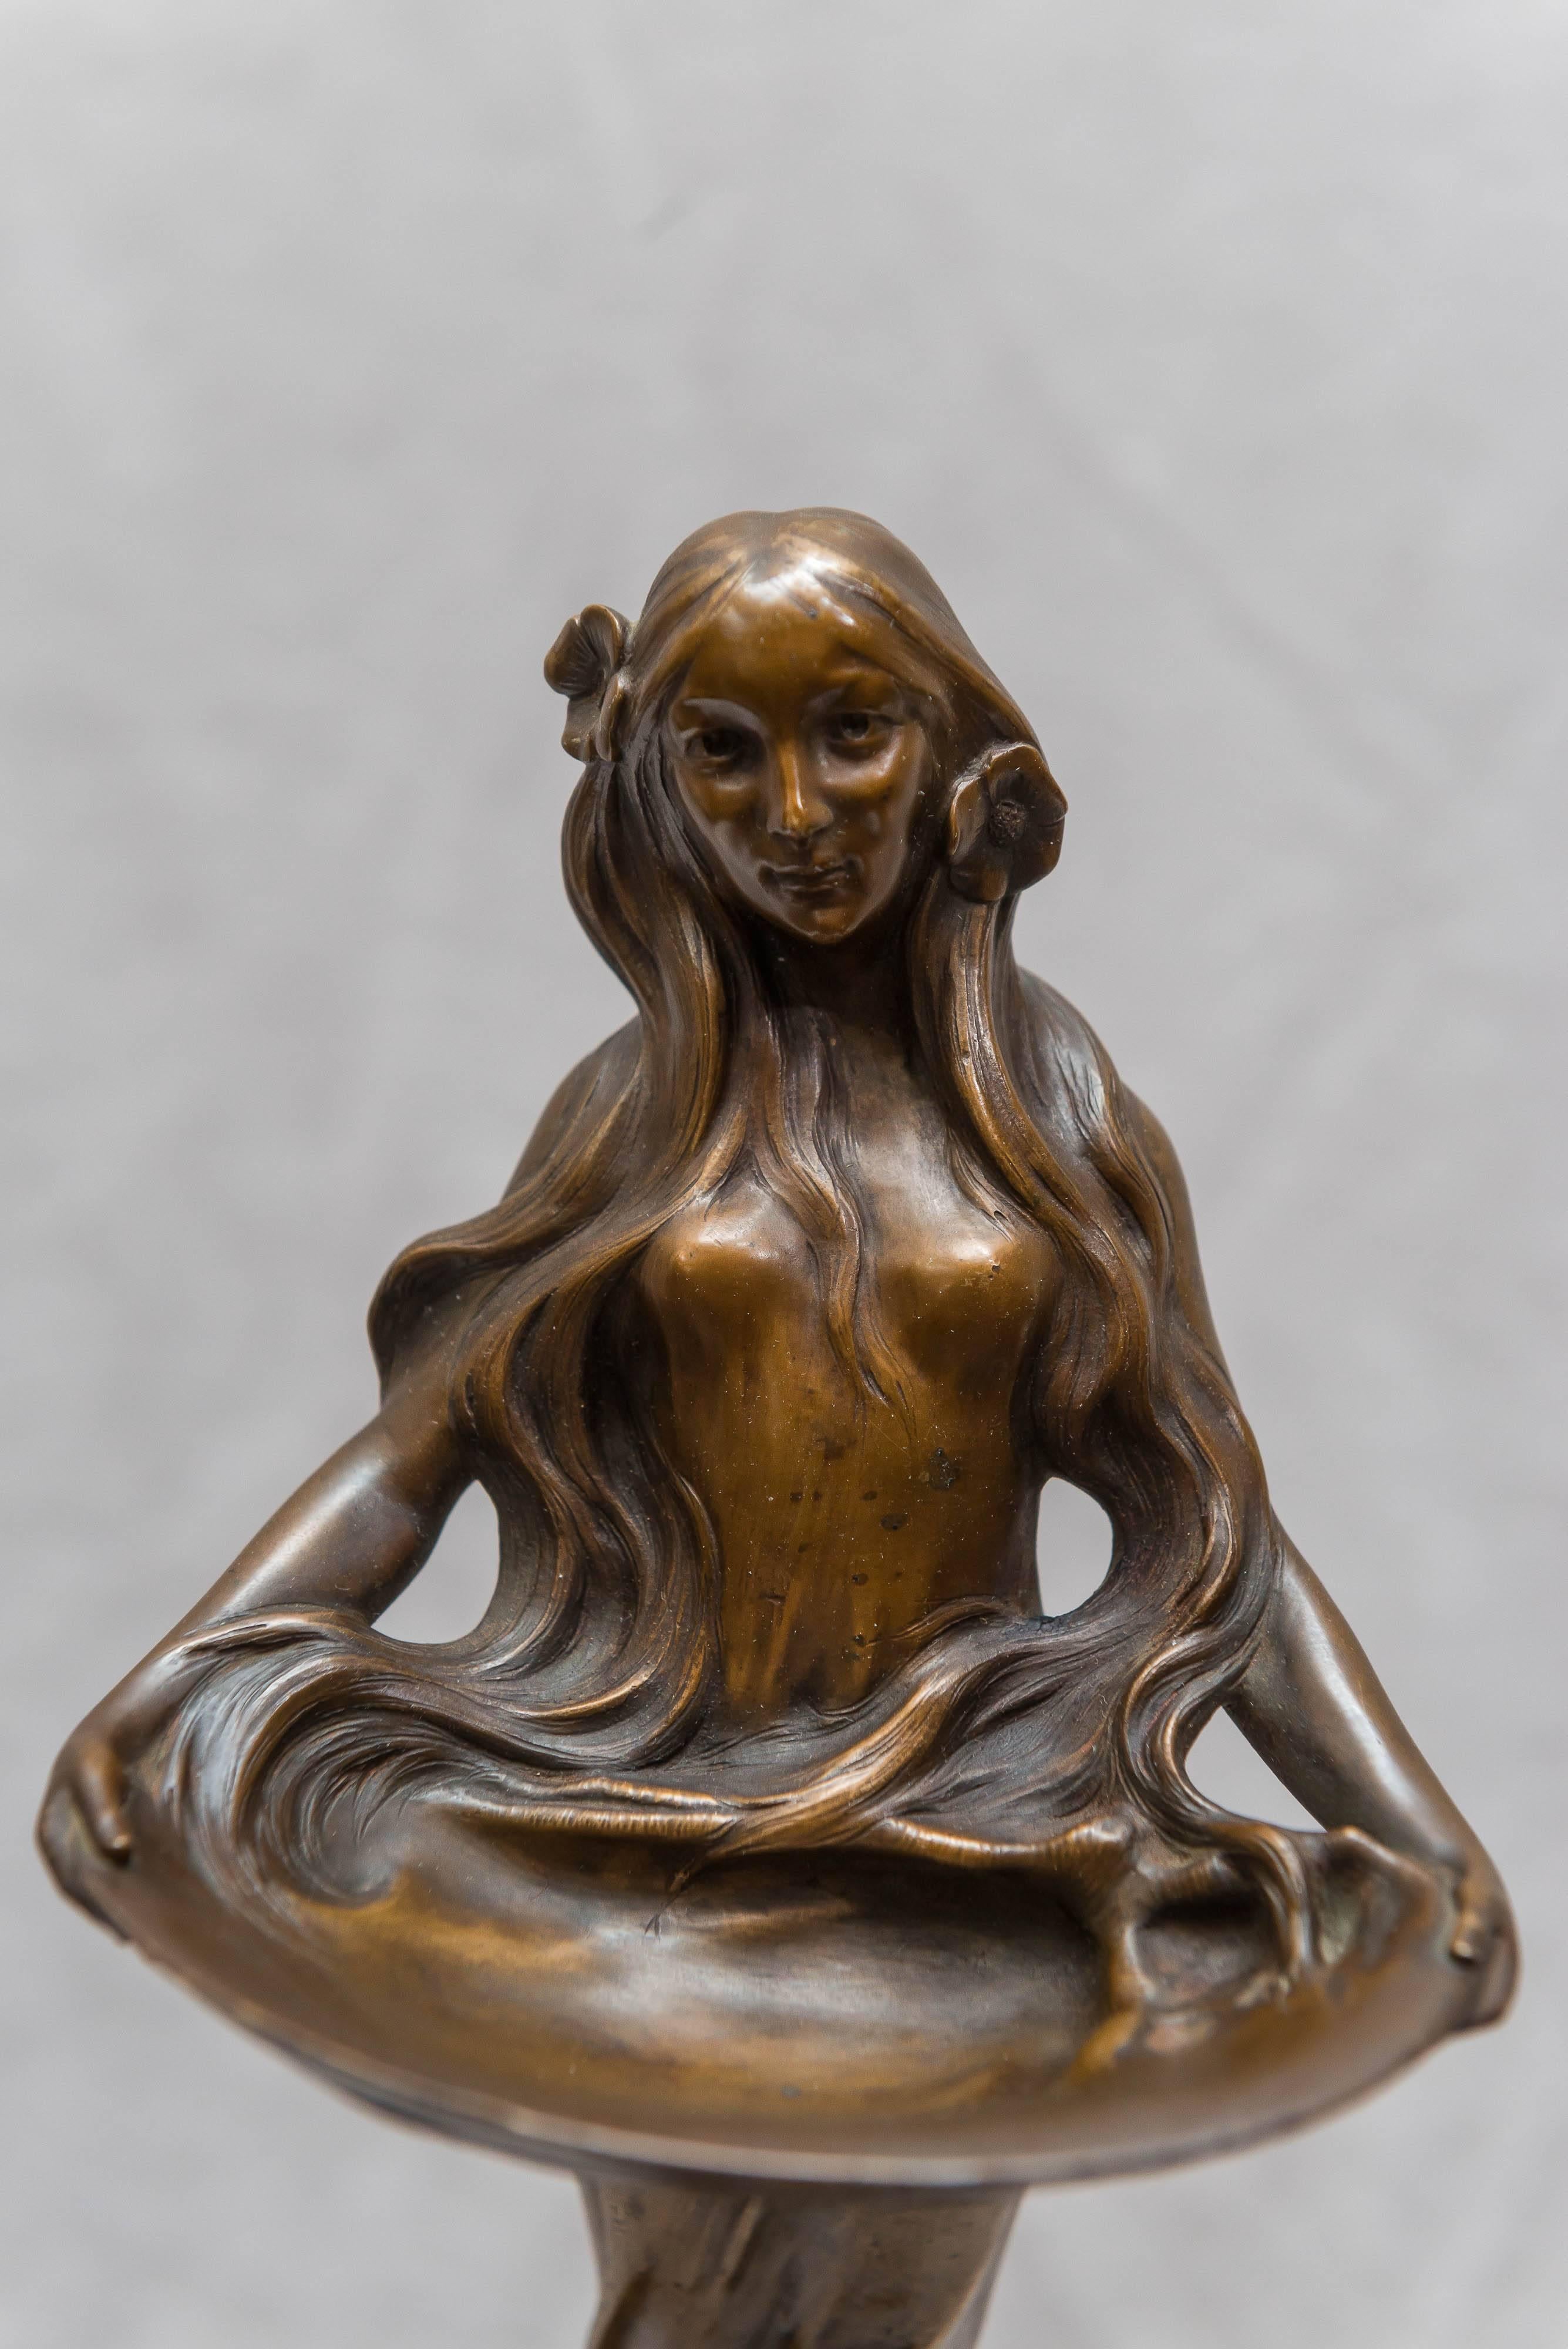 Austrian Art Nouveau Bronze Figure of a Young Maiden Holding a Tray